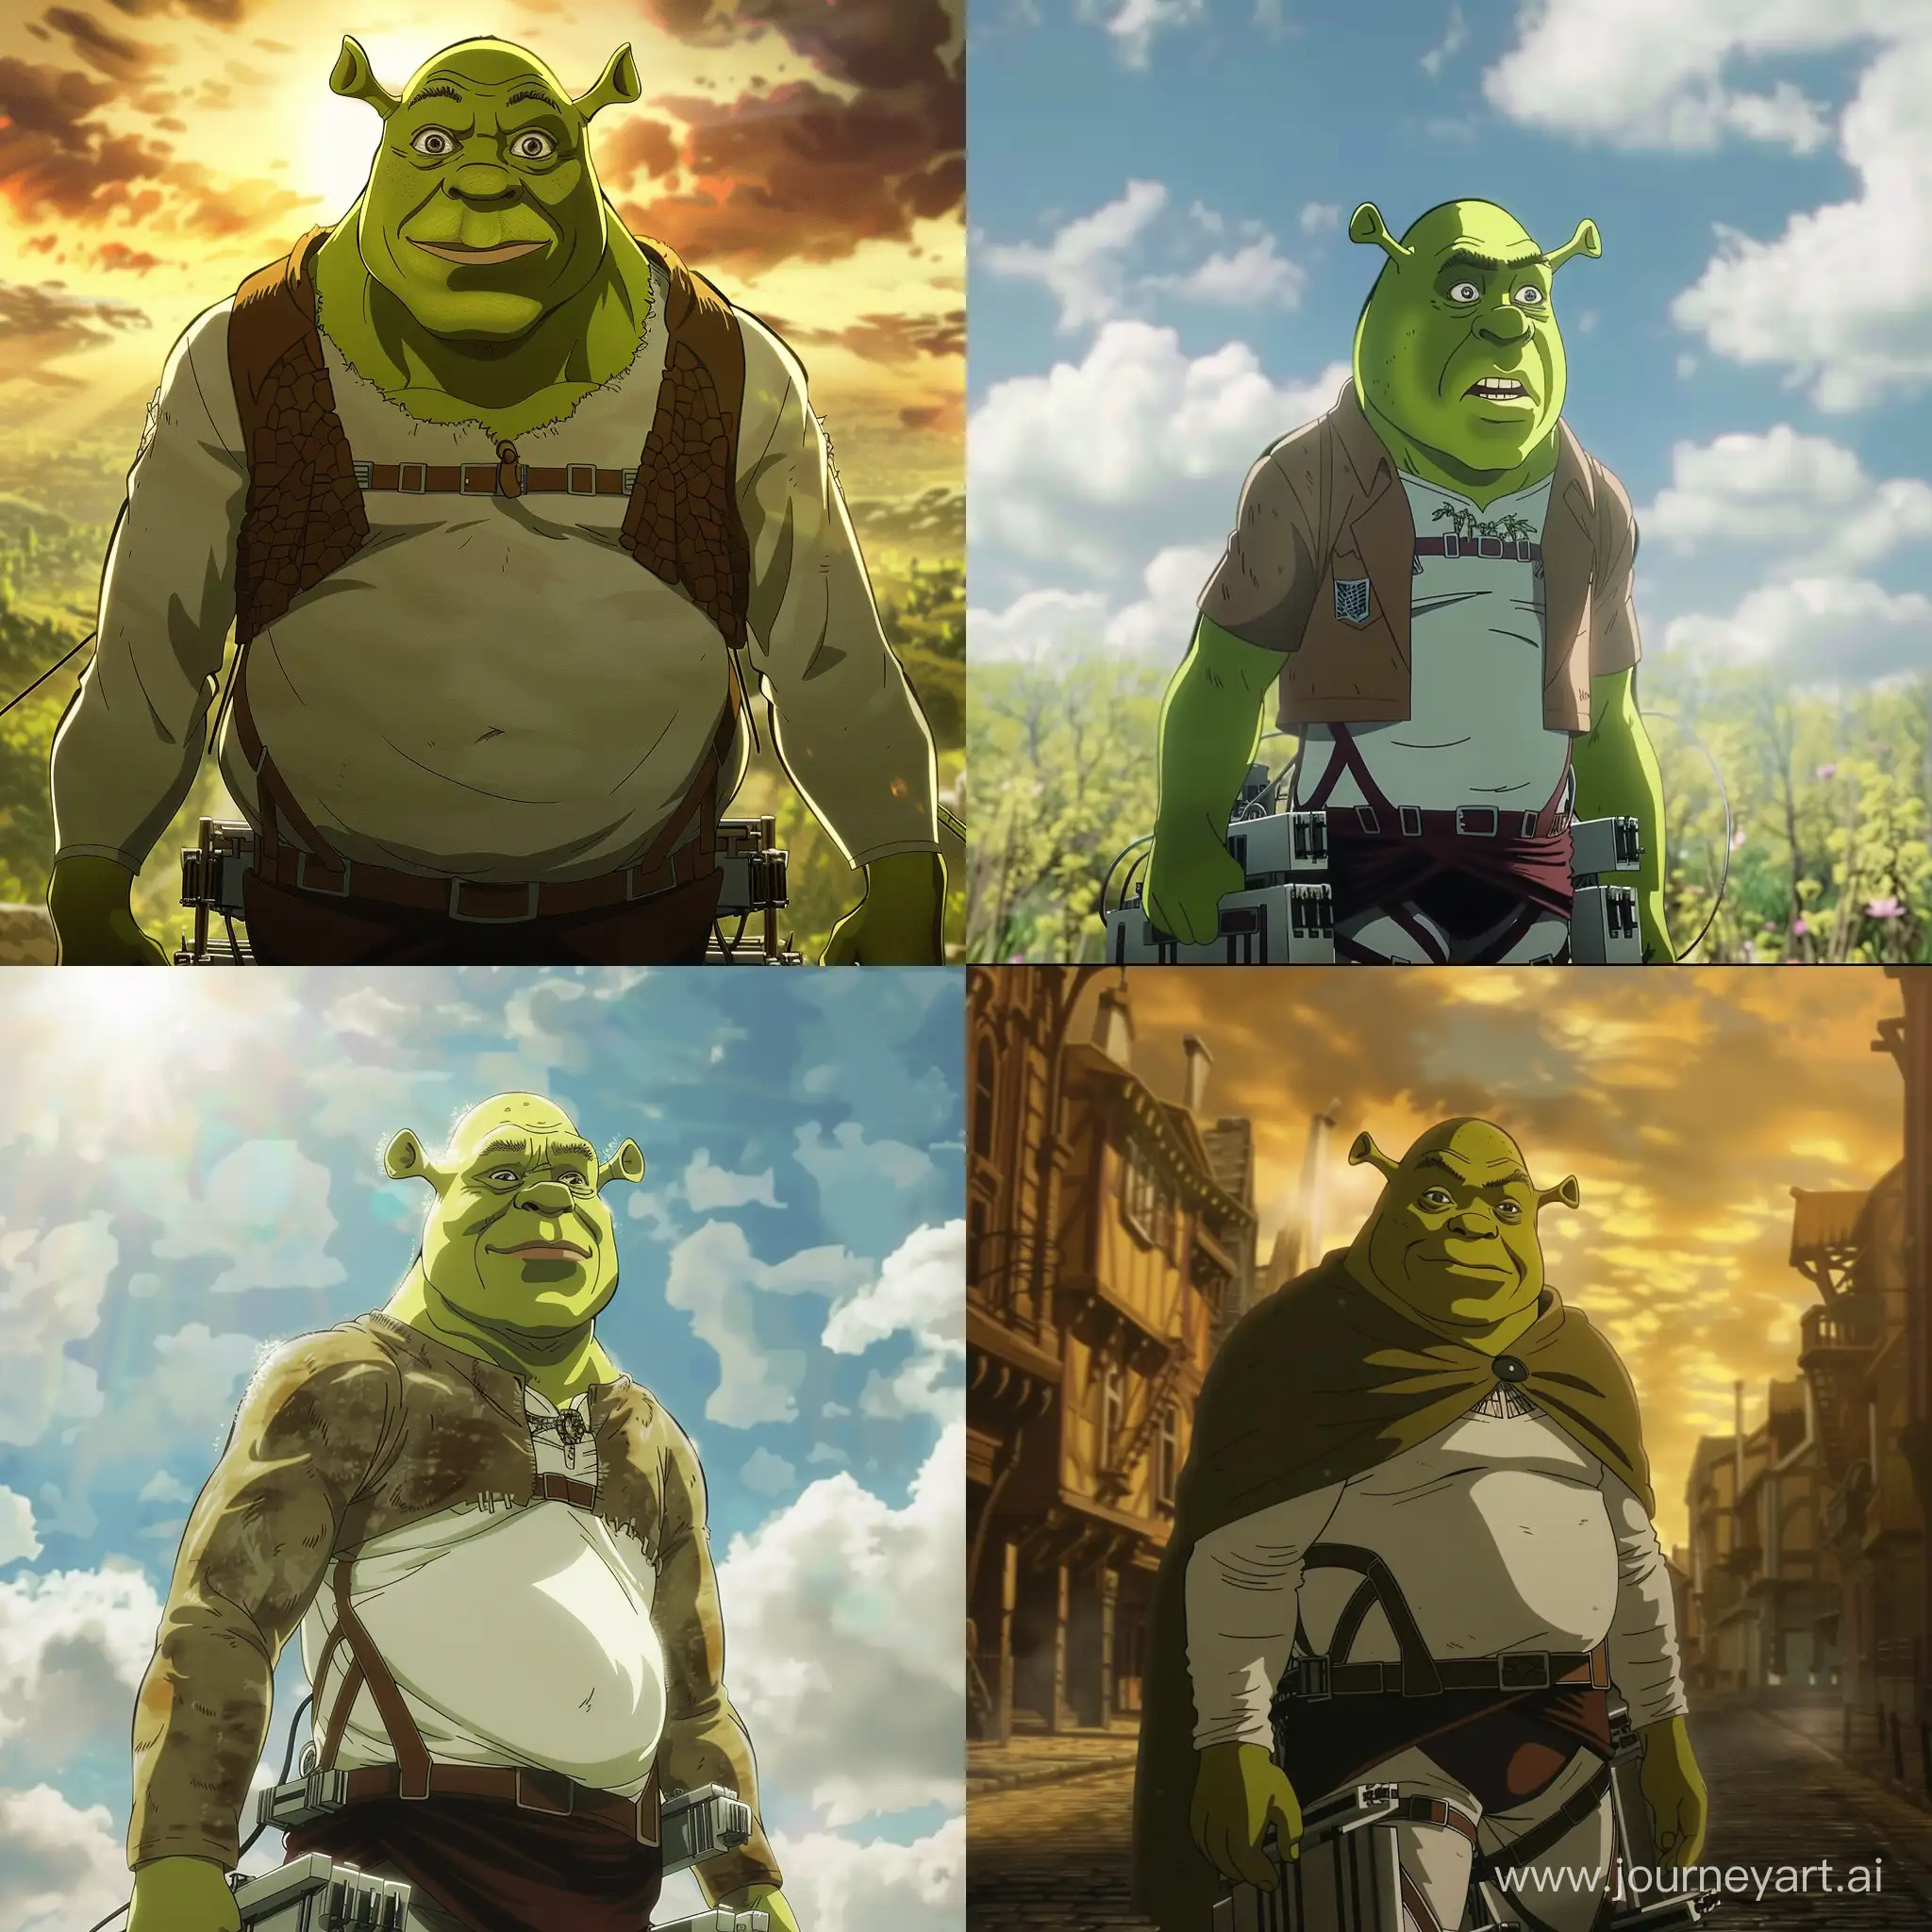 Shrek-in-Anime-Attack-on-Titan-Crossover